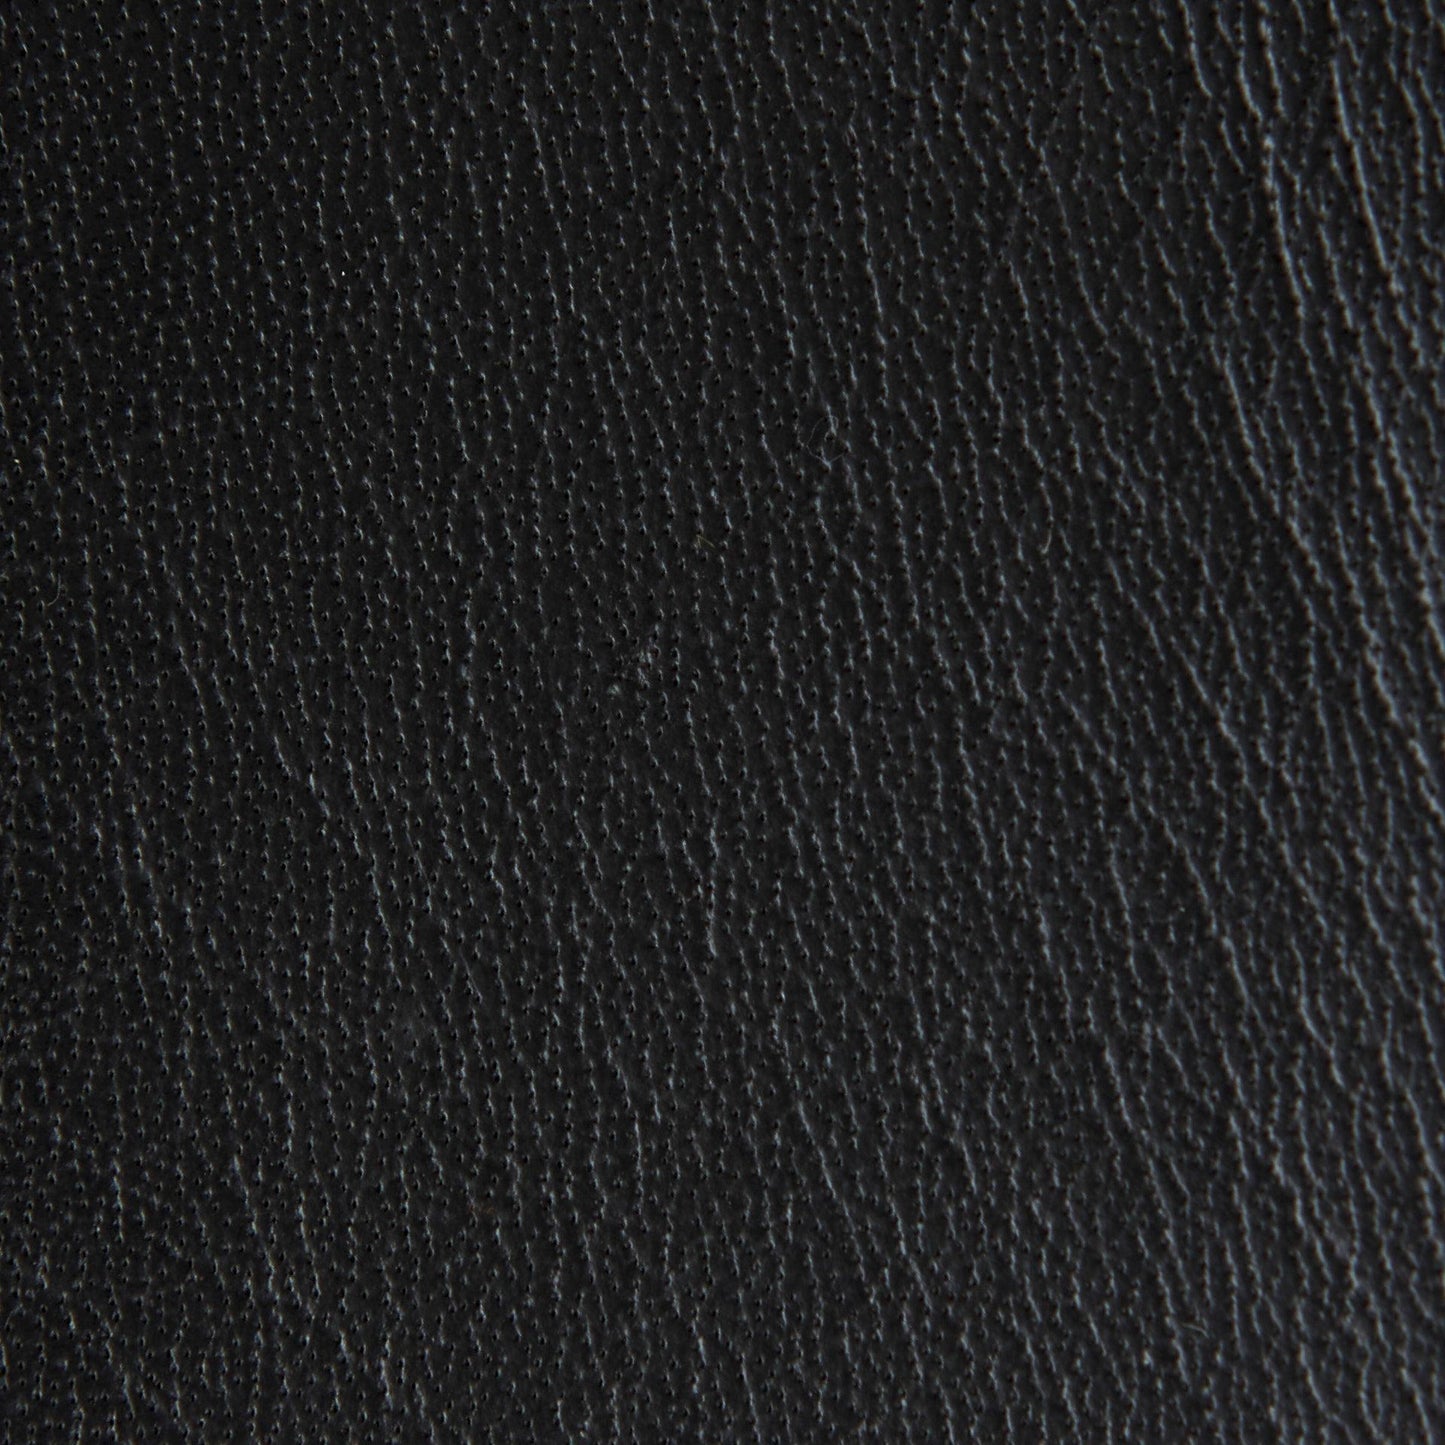 Clarissa 18.0L x 16.0W x 30.25H Black Woven Leather Seat W/ Dark Nickel Frame Bar Stool